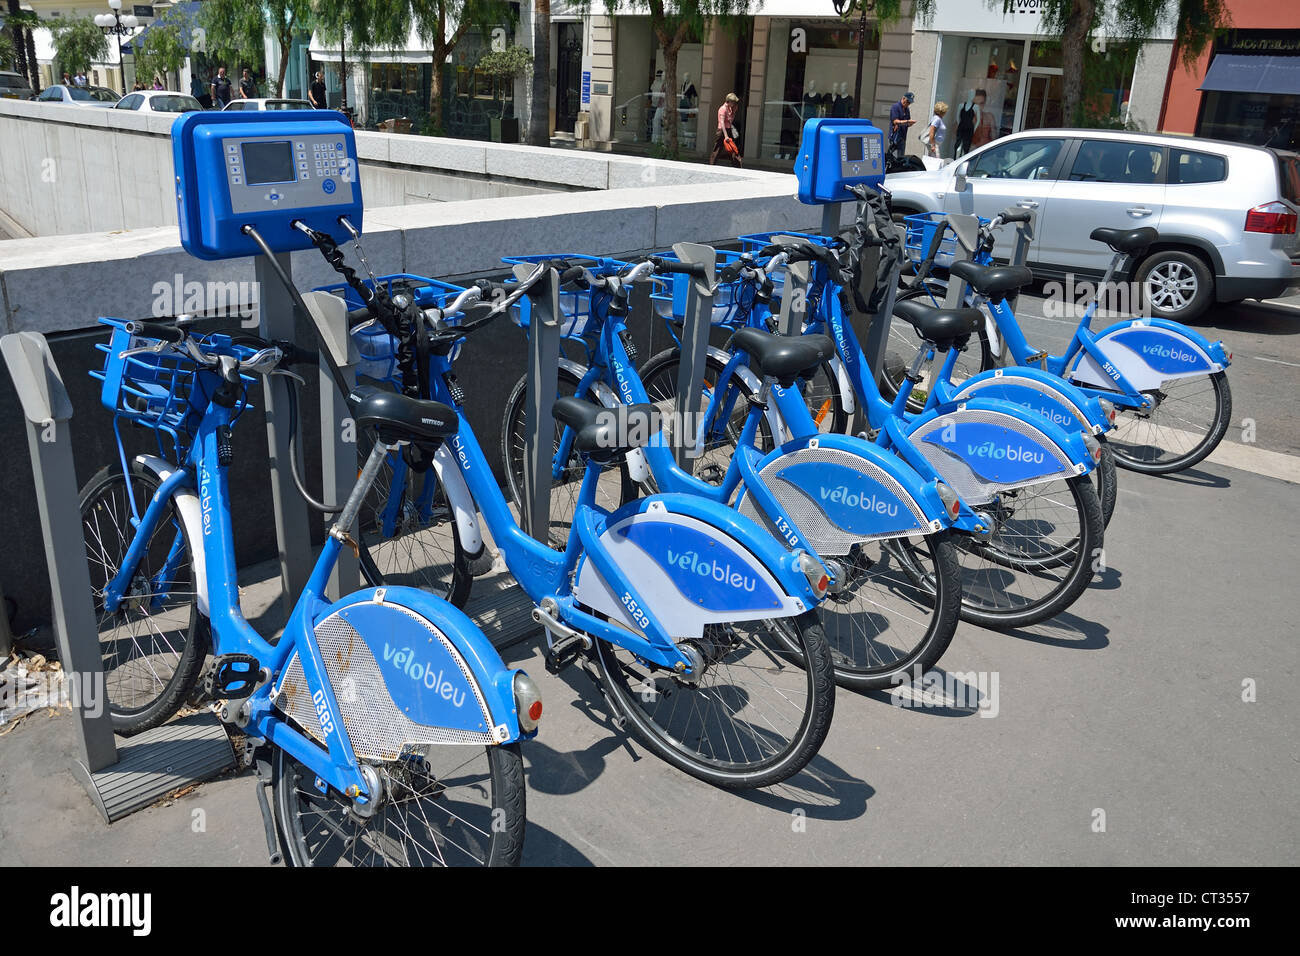 Vélo Bleu self-service di stazione di biciclette, Place Masséna, Nizza Côte d'Azur, Alpes-Maritimes, Provence-Alpes-Côte d'Azur, in Francia Foto Stock